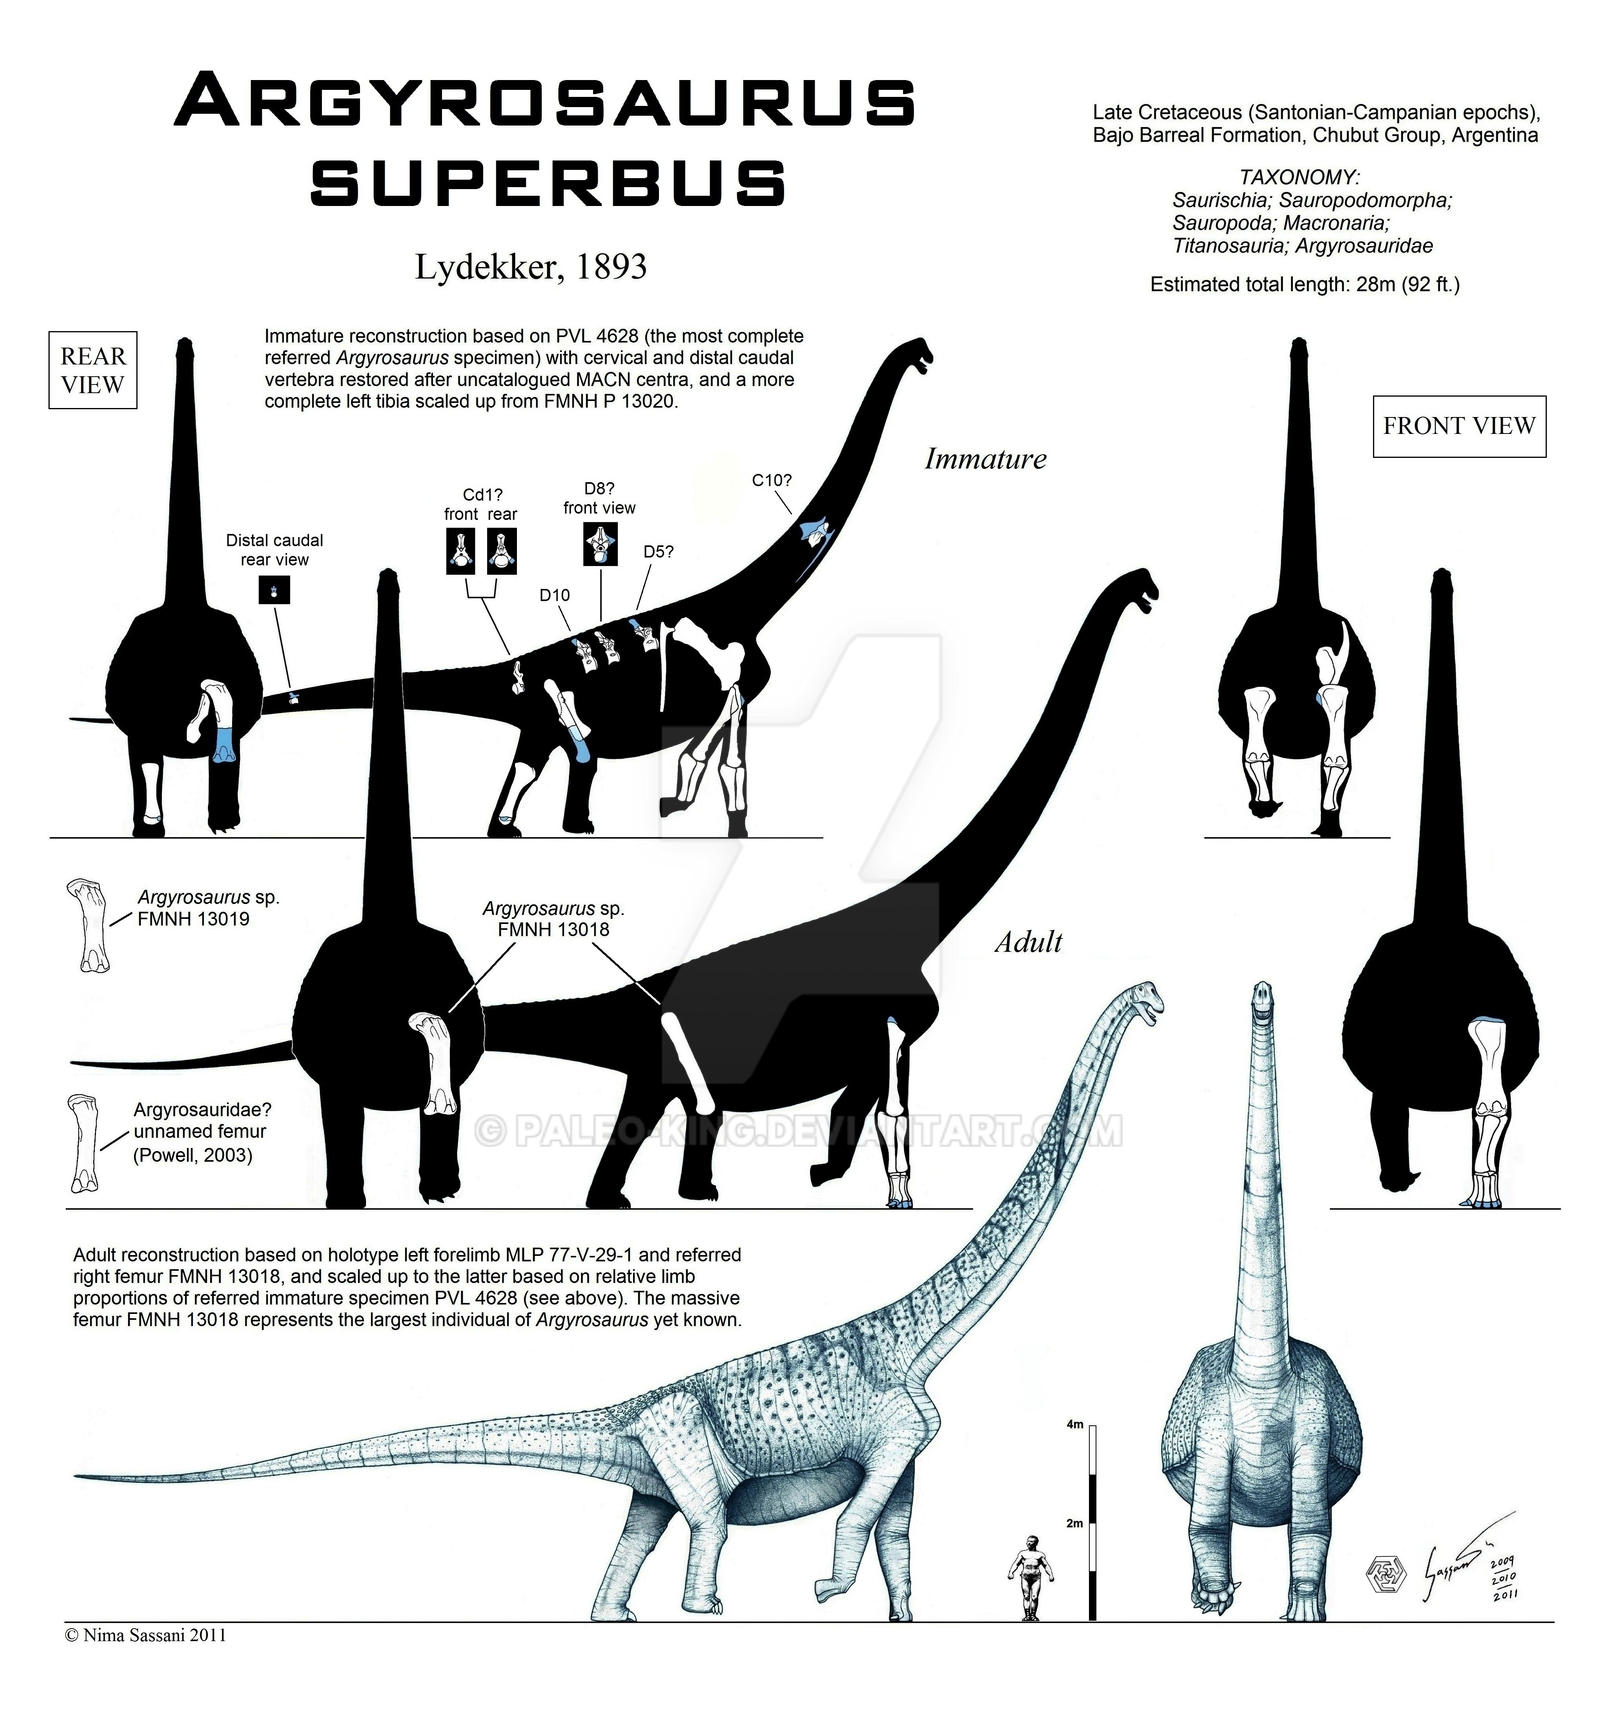 Argyrosaurus superbus